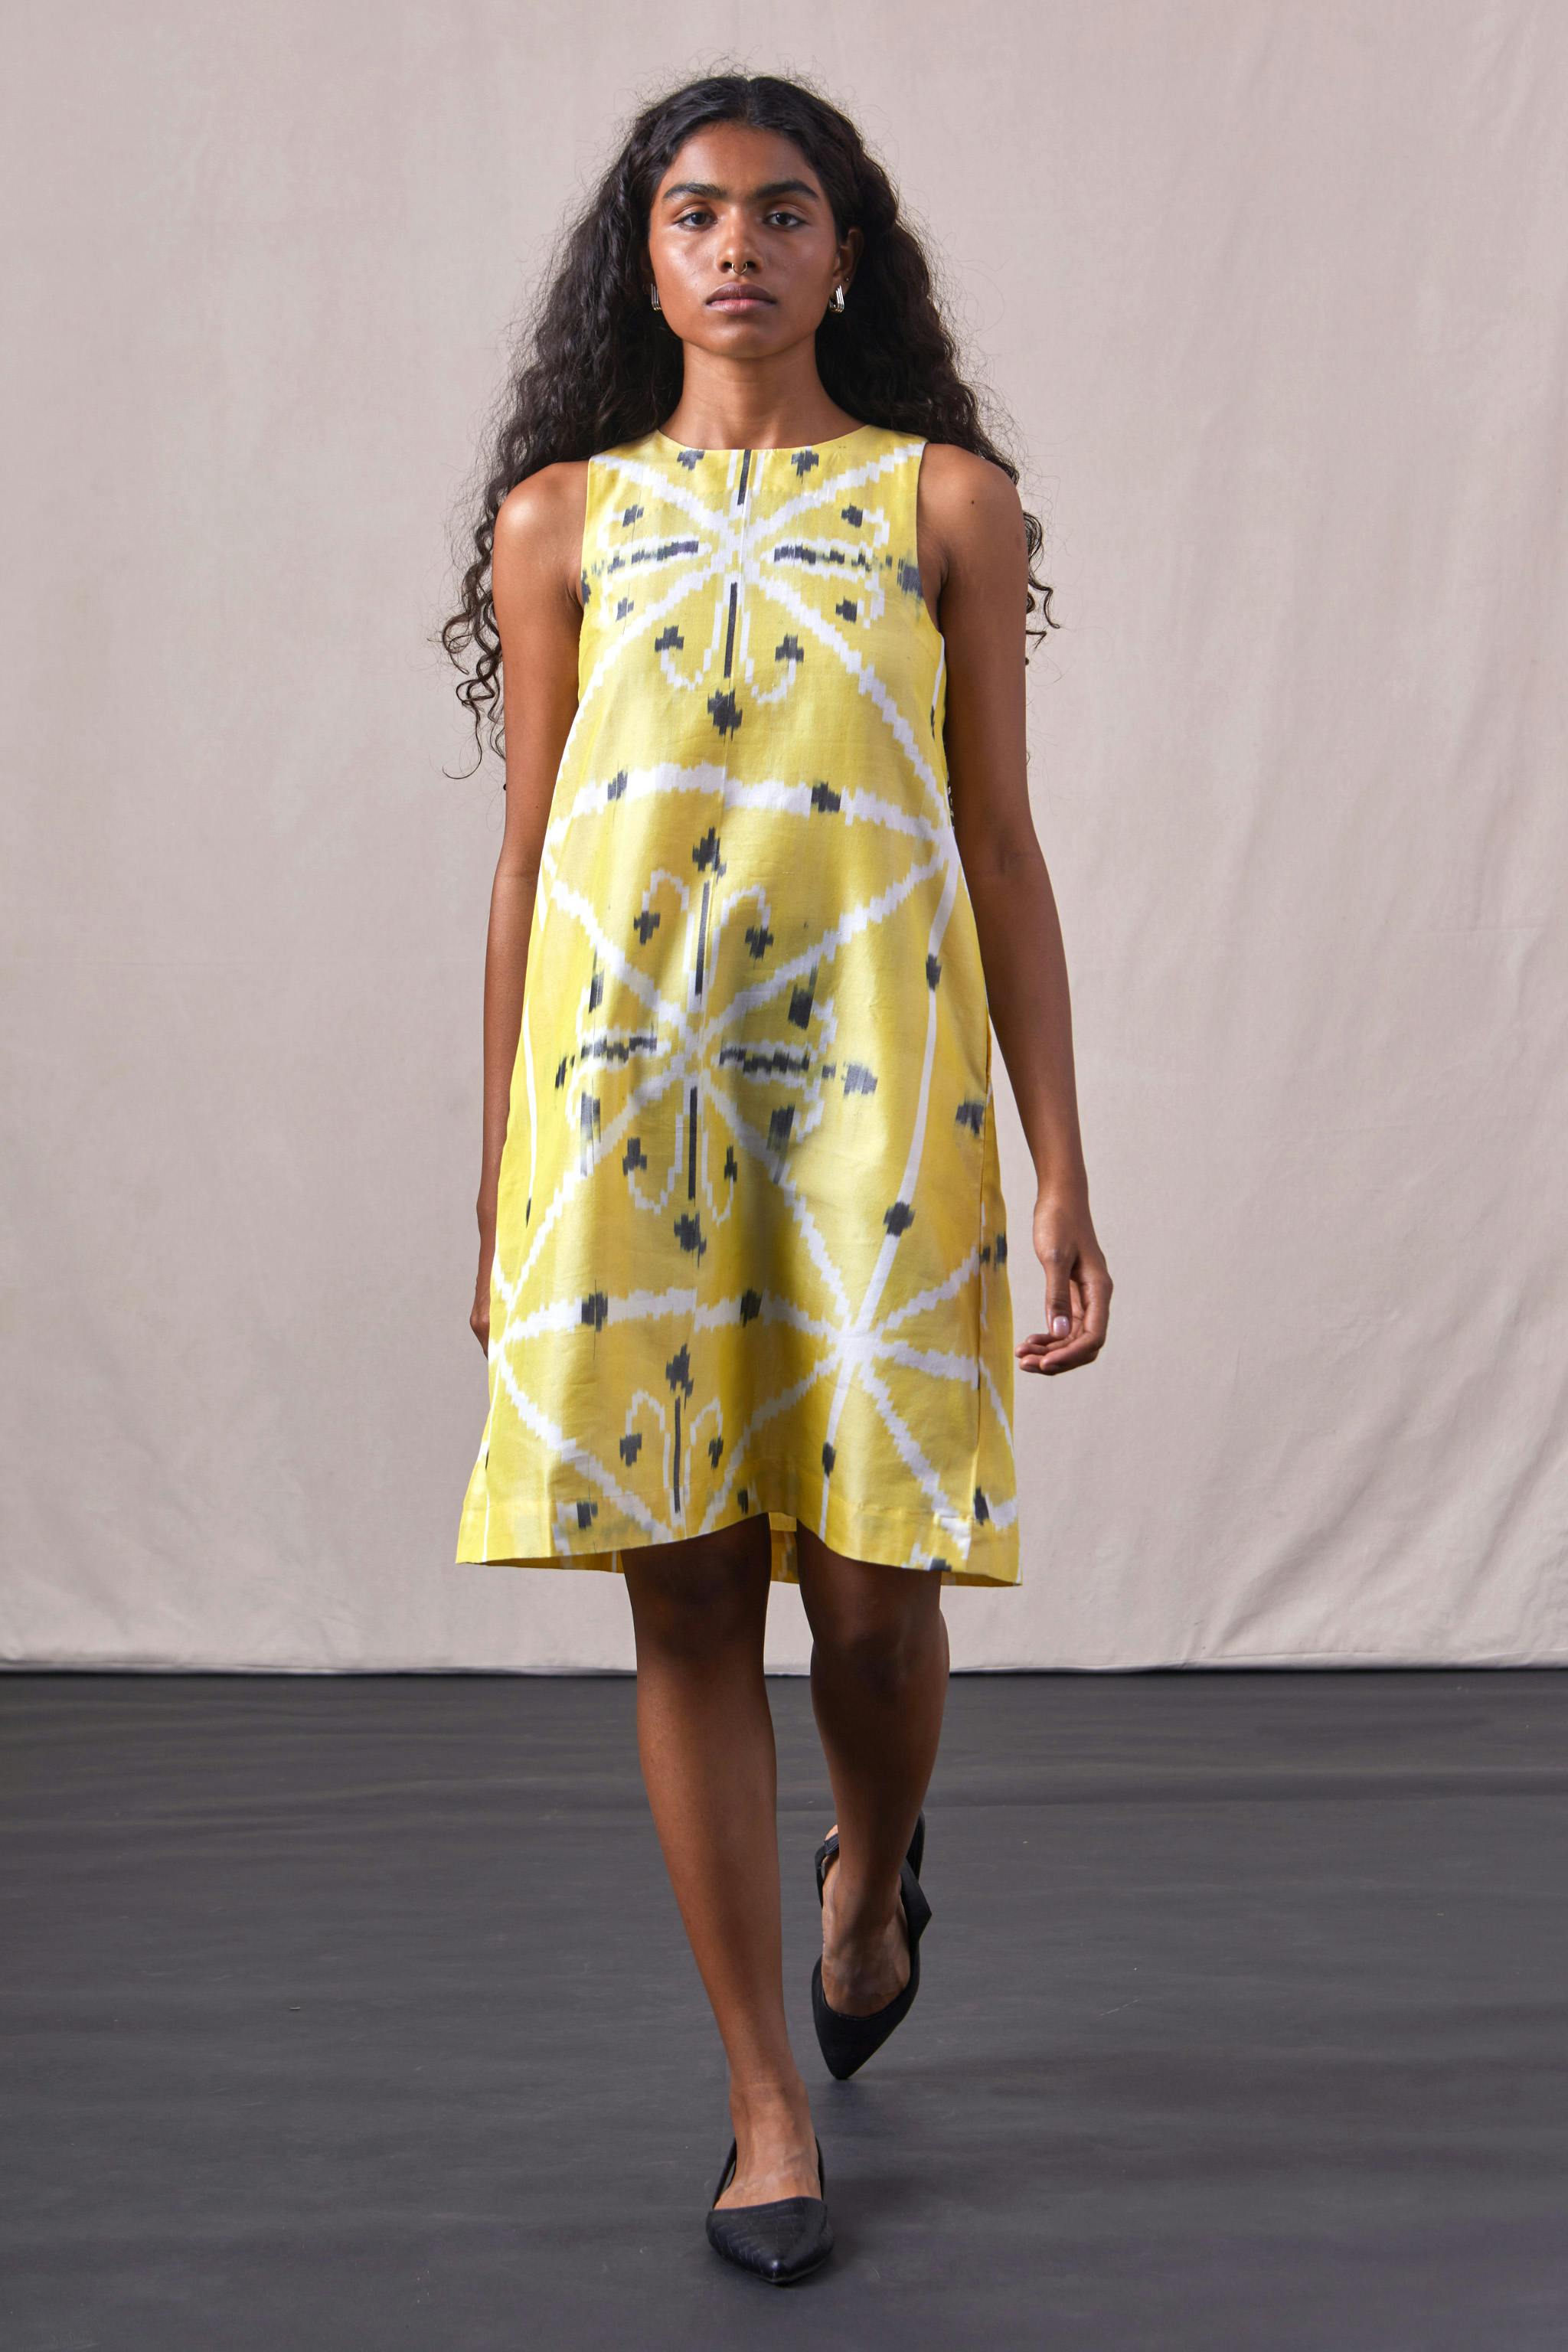 Thumbnail preview #3 for Kalai - Ikat Dress Yellow